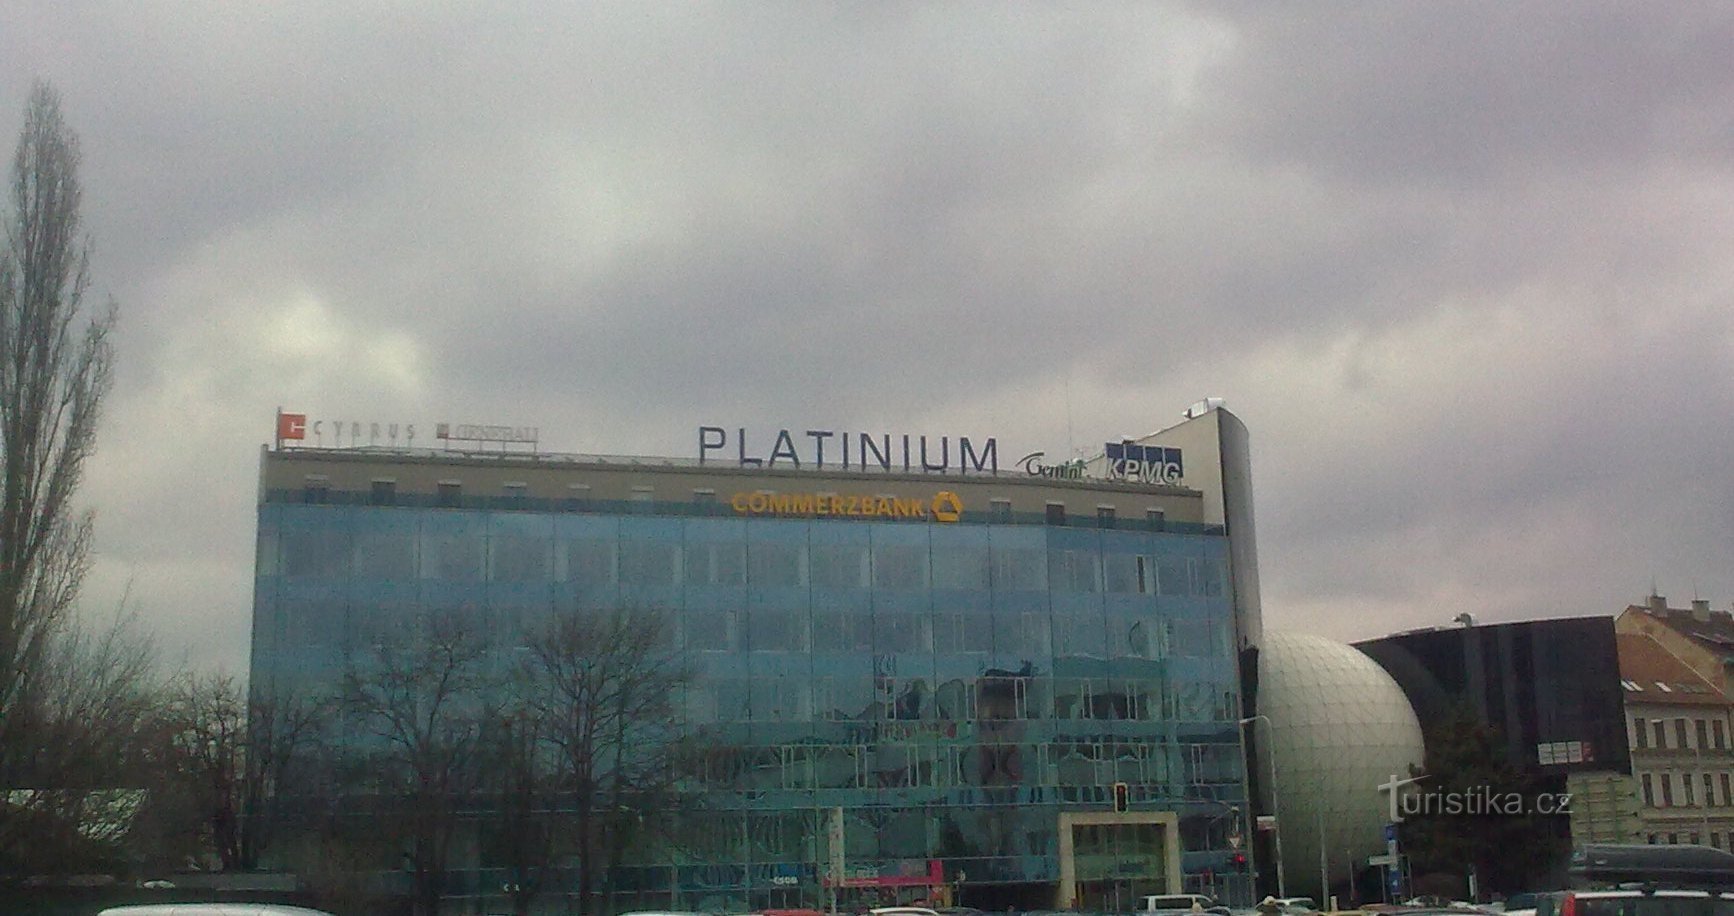 Platinium com centro SONO